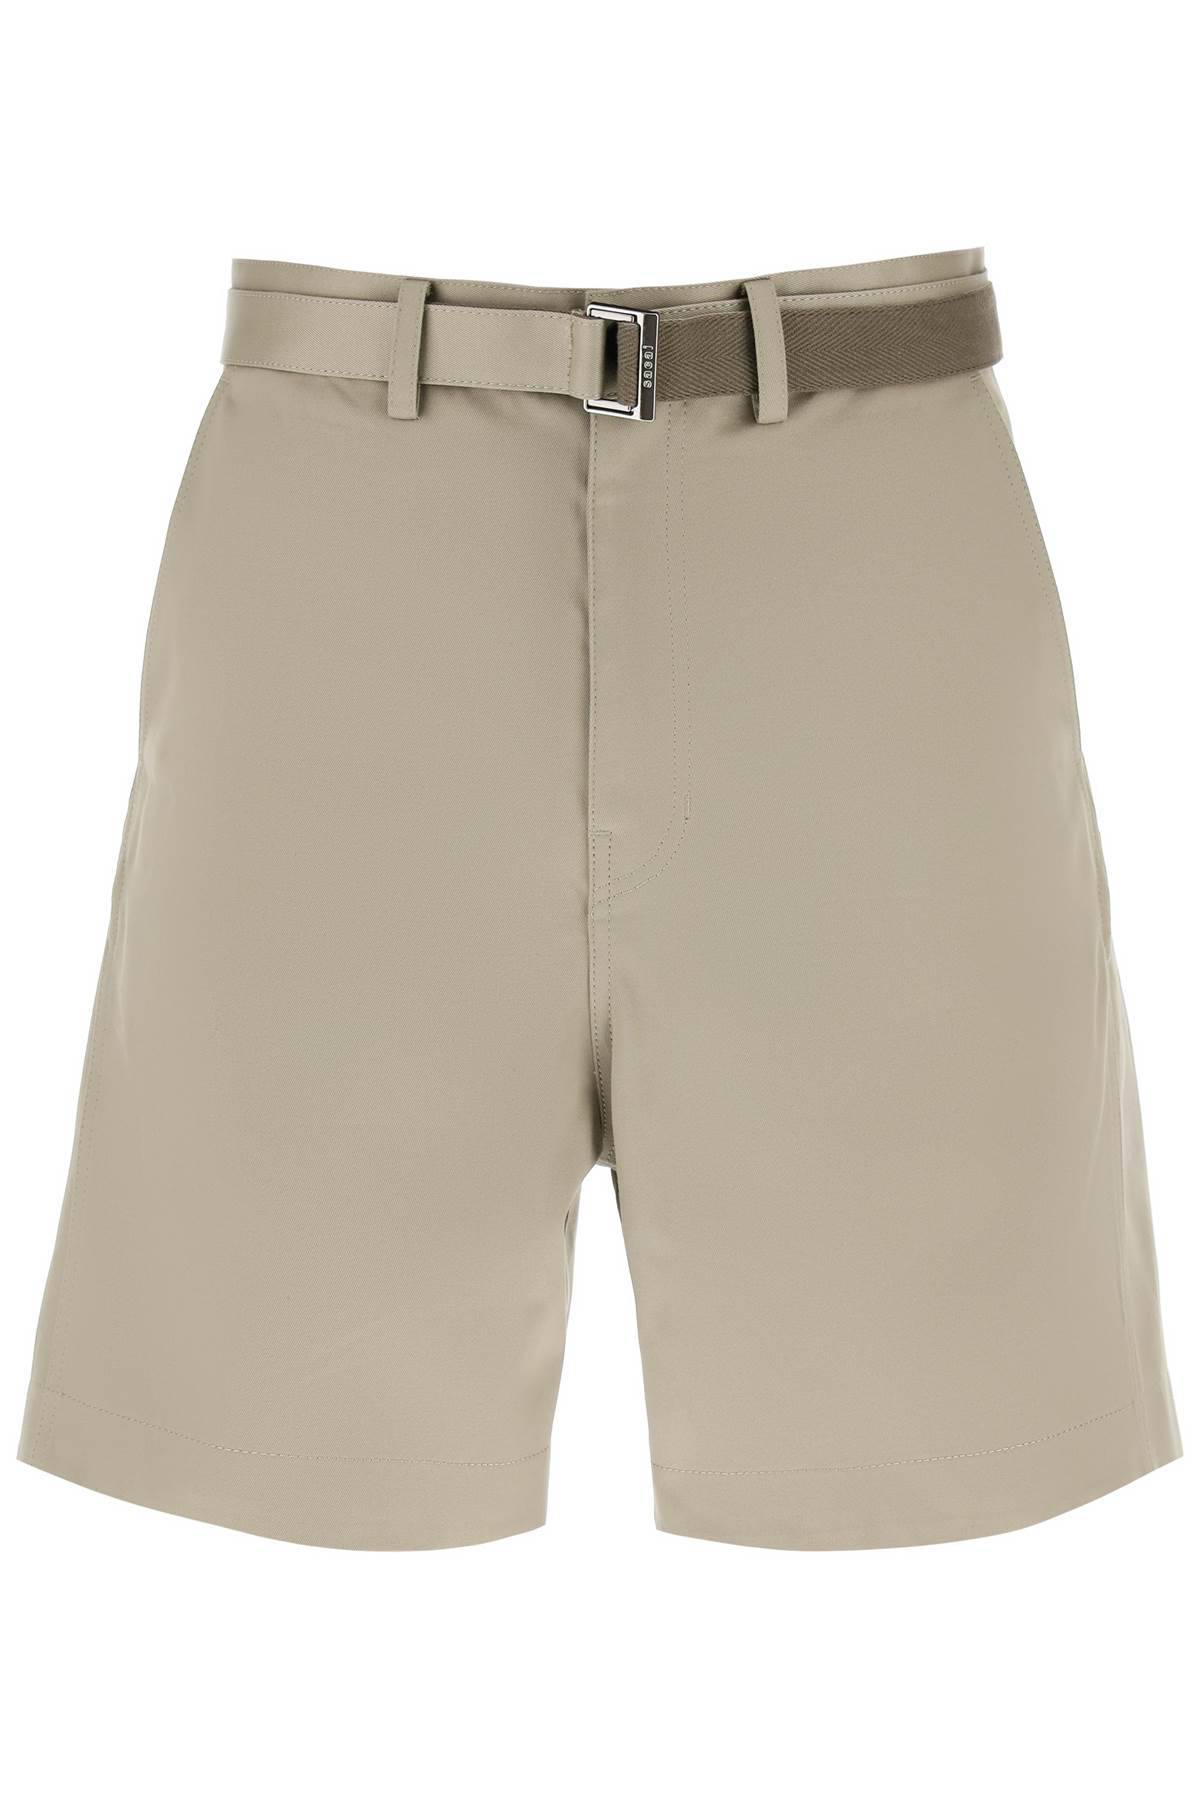 Sacai SACAI cotton belted shorts